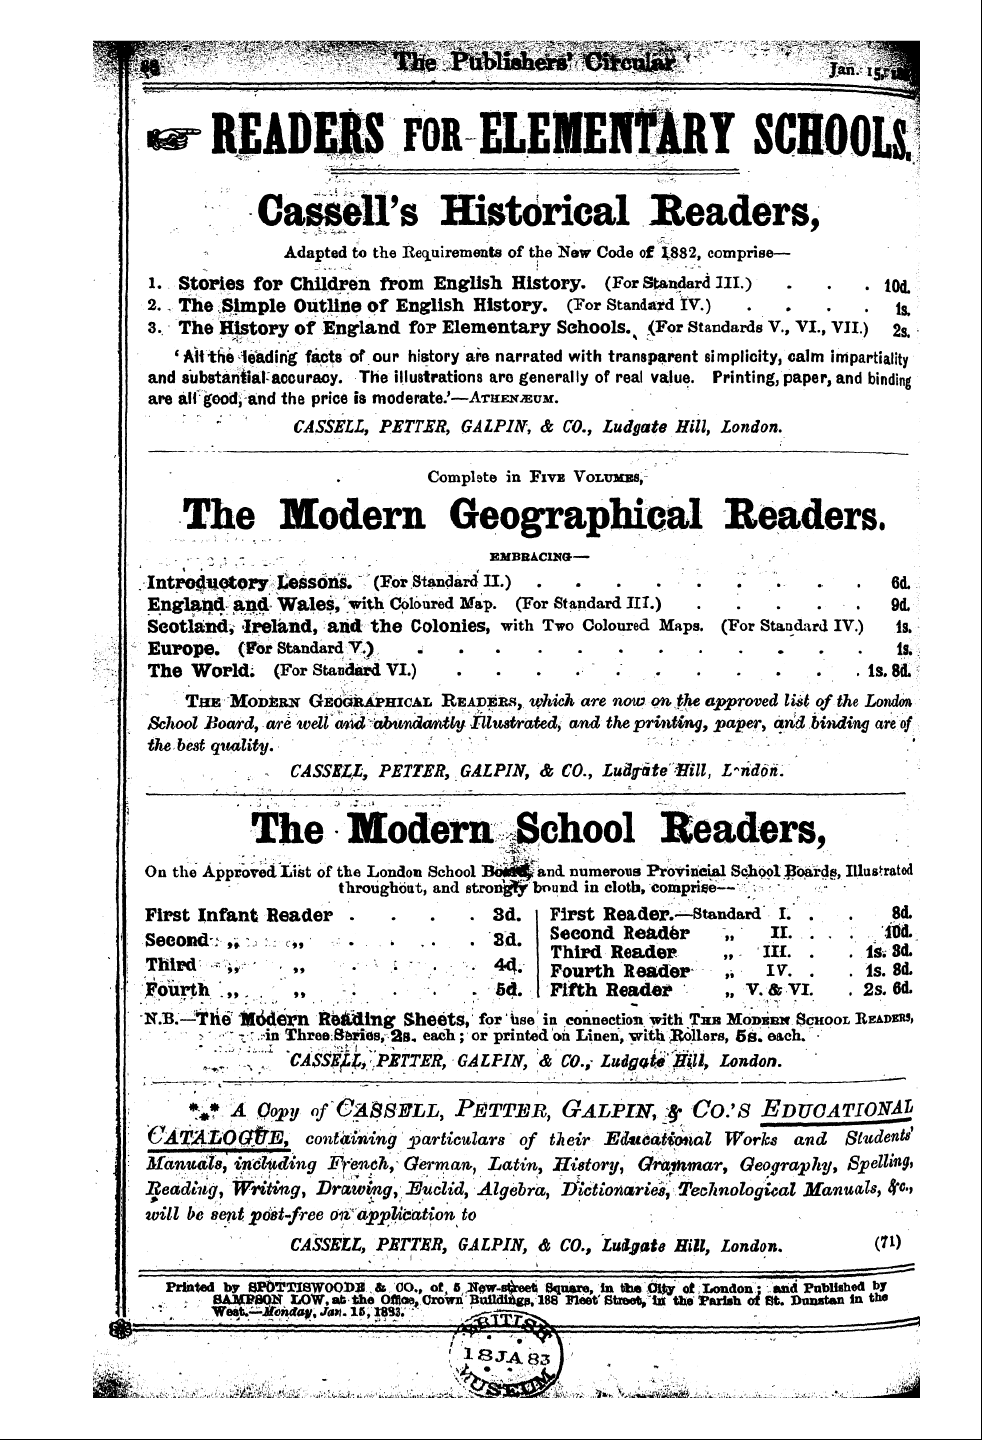 Publishers’ Circular (1880-1890): jS F Y, 1st edition - Printed Bajfcfflon Bampflon Toy 0p6tti L...